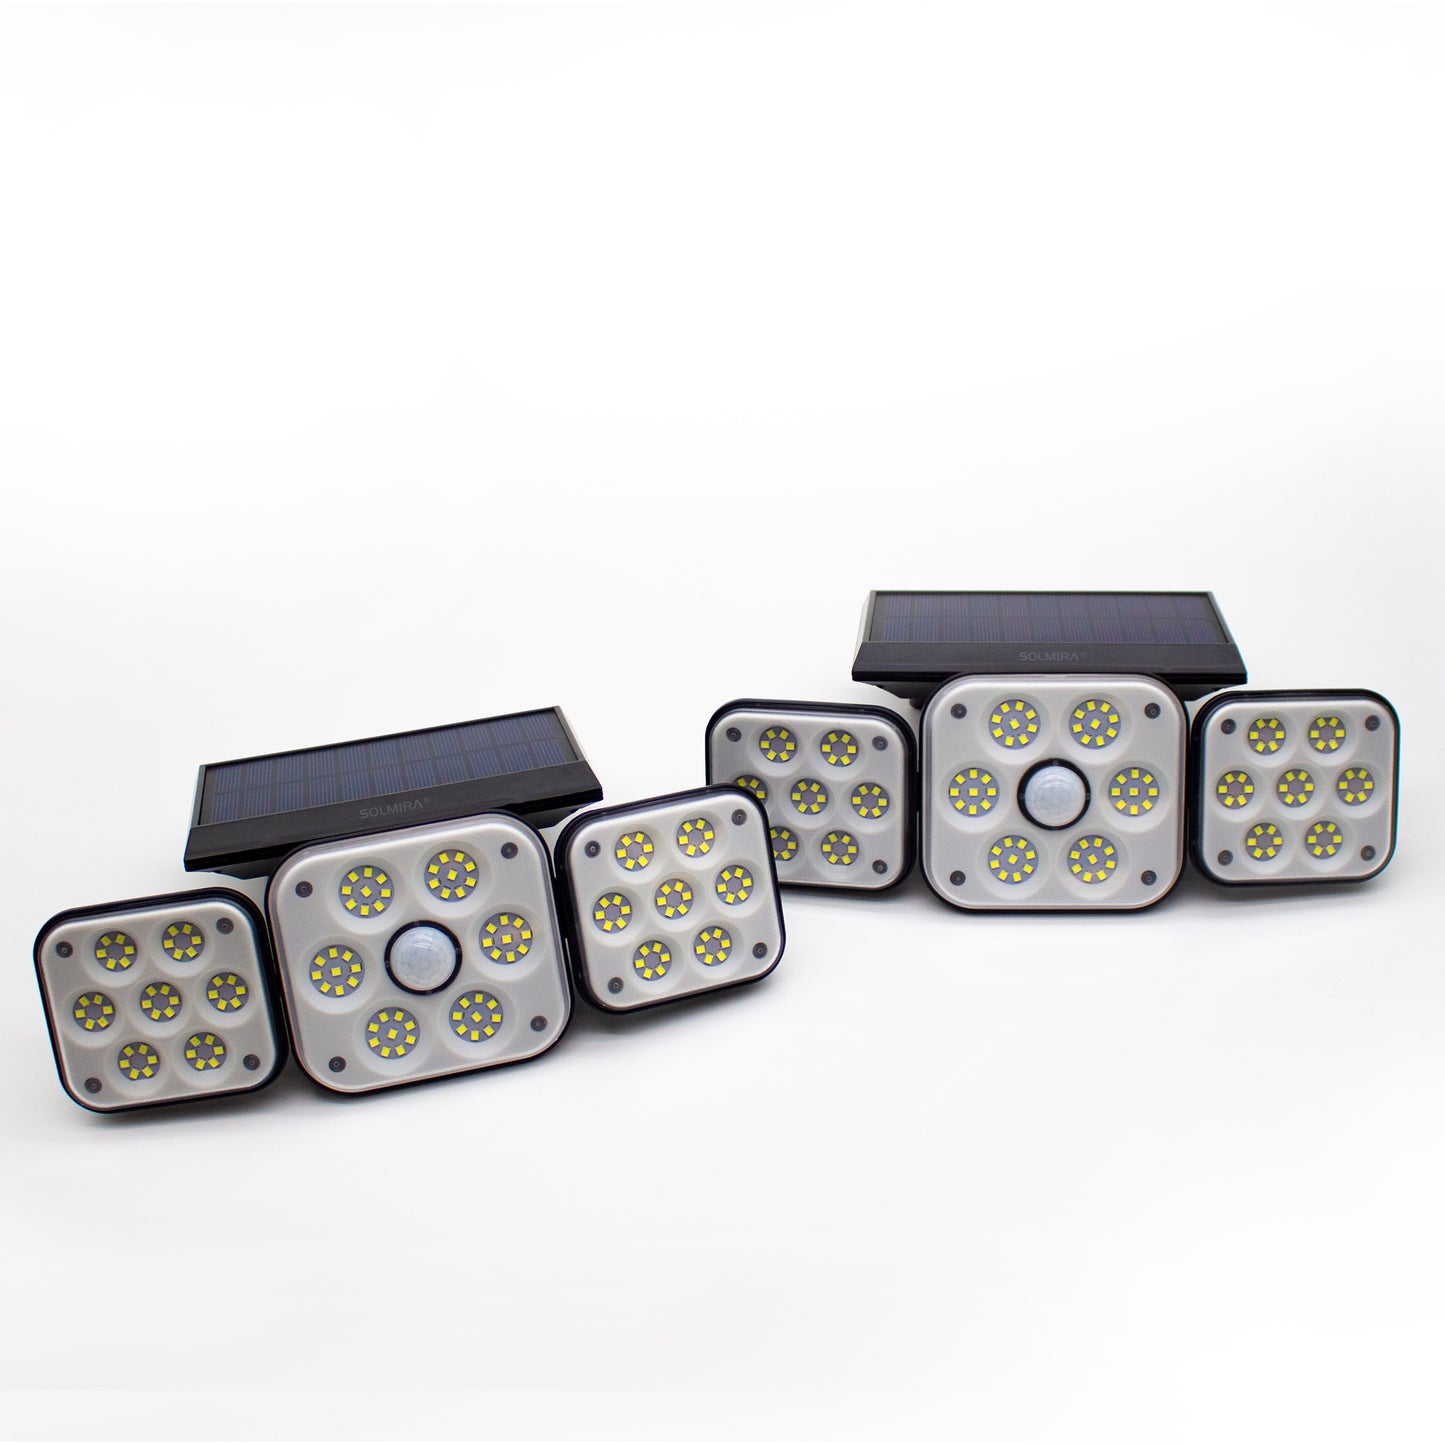 SOLMIRA® Luz Solar LED Exterior de Pared, Pack de 2 Apliques de 138 LEDs, Iluminación 270°, 3 Modos, Certificado CE y RoHS